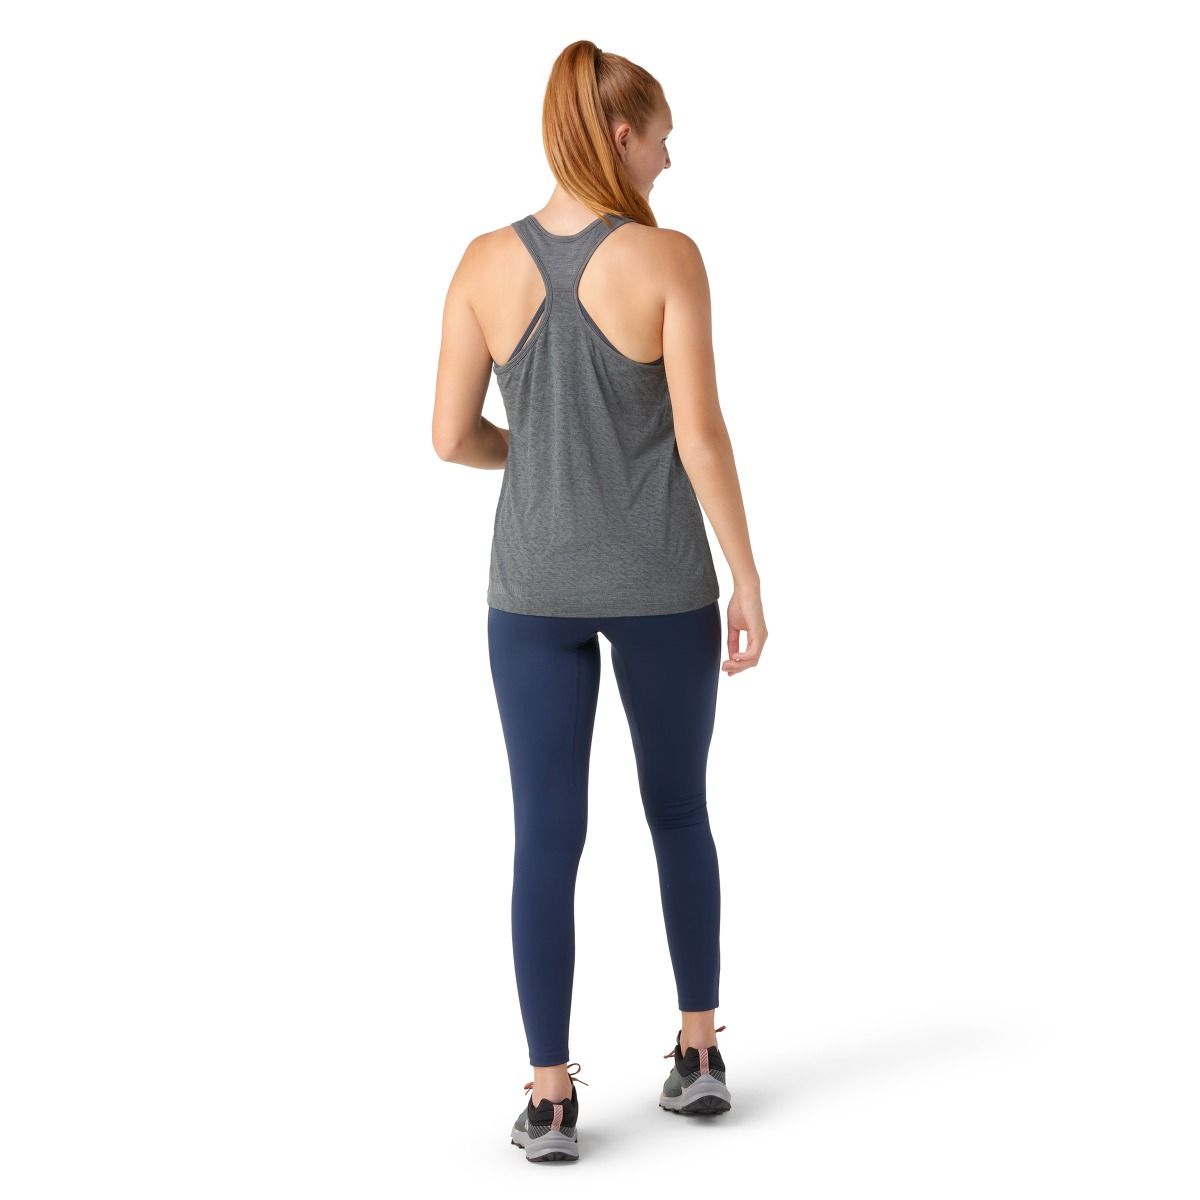 Merino Wool Running T-shirt Yoga Tank Top Workout Tank Tops for